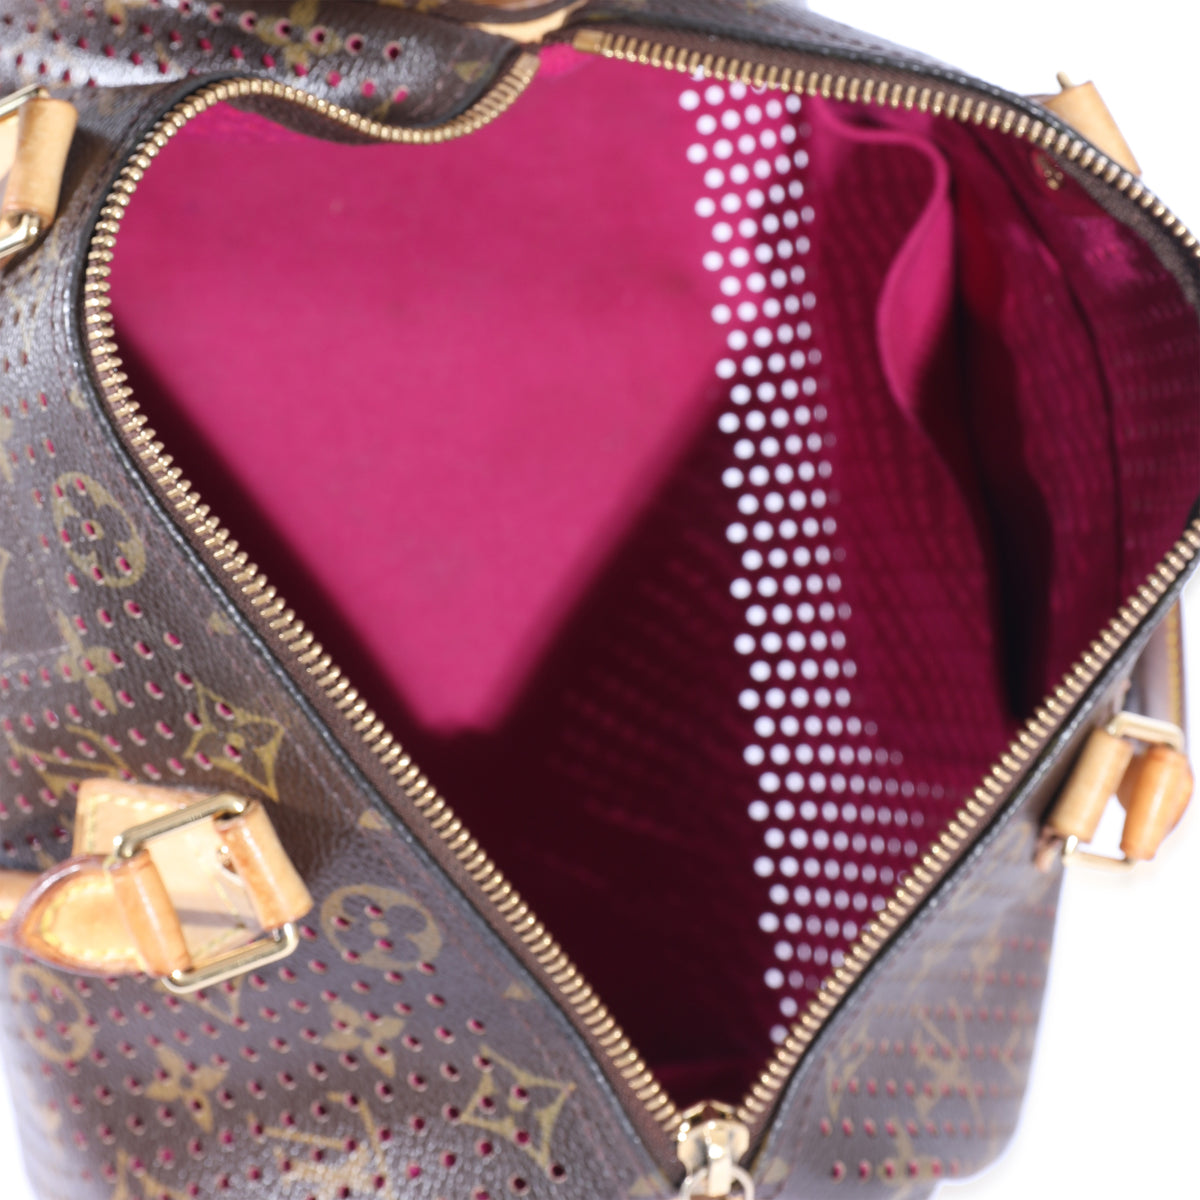 Vintage Louis Vuitton Monogram Perforated Fuchsia Shoulder Bag